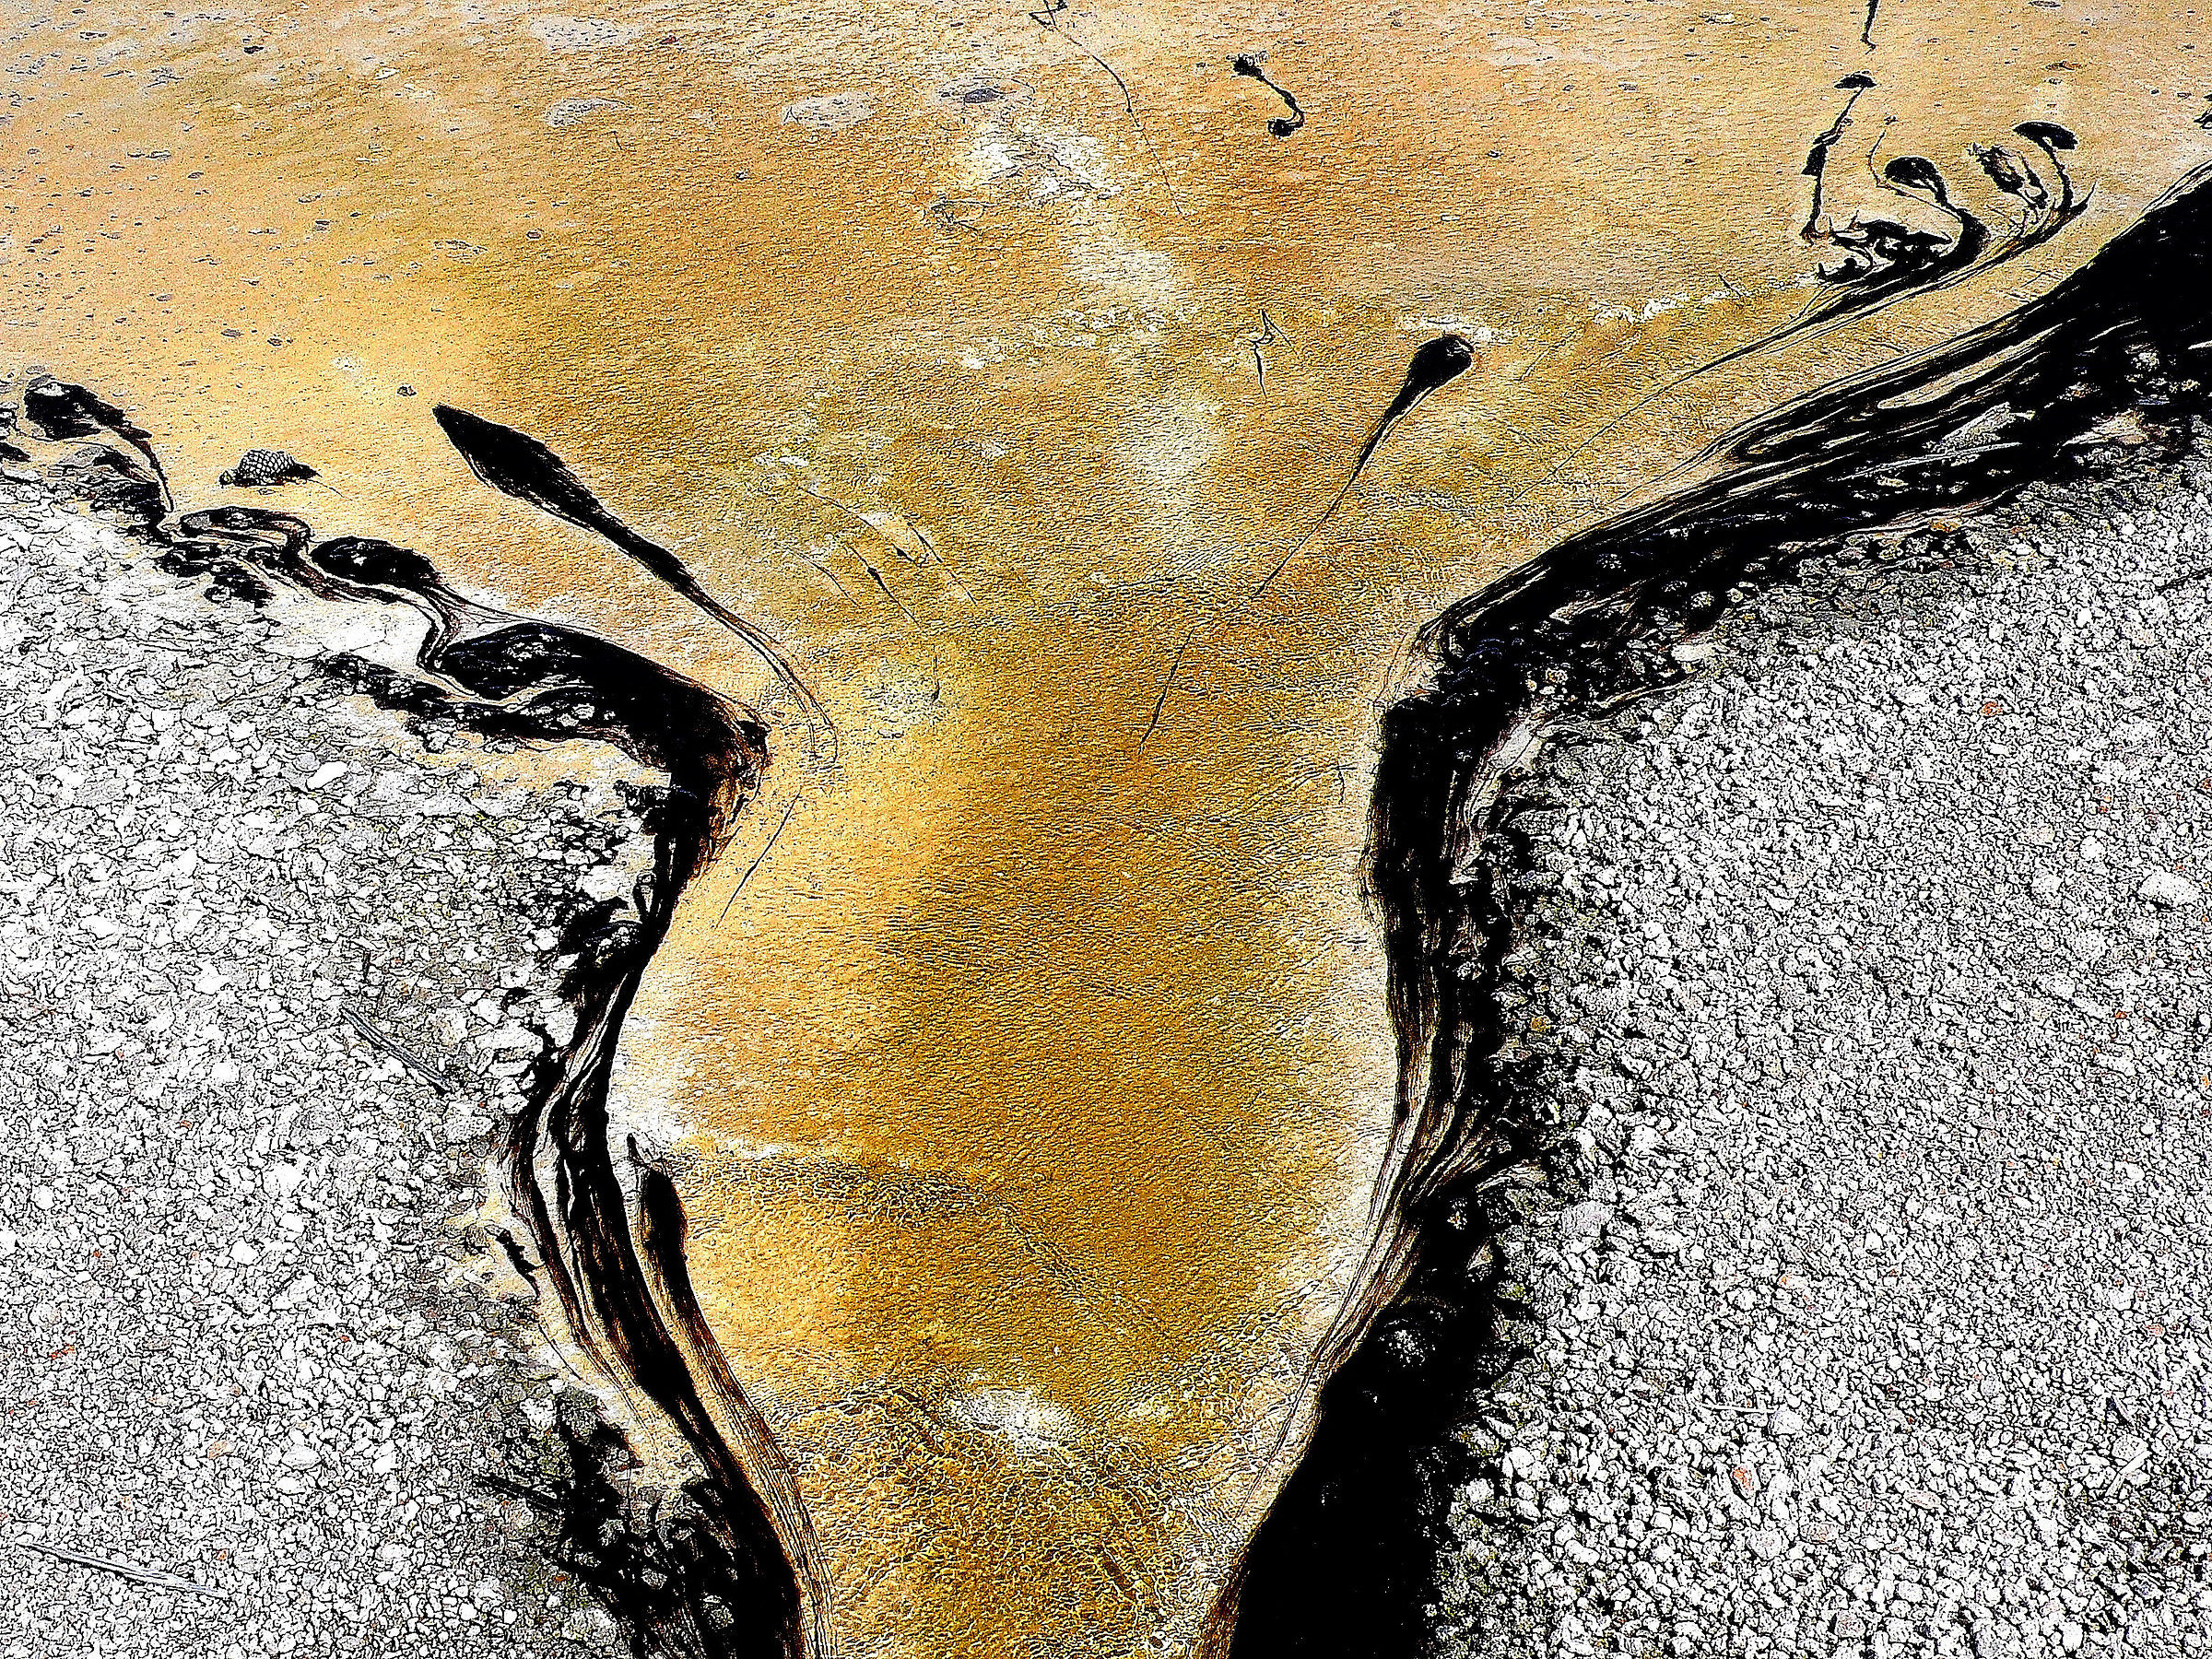 Sulfur (Norris Geyser Basin)...